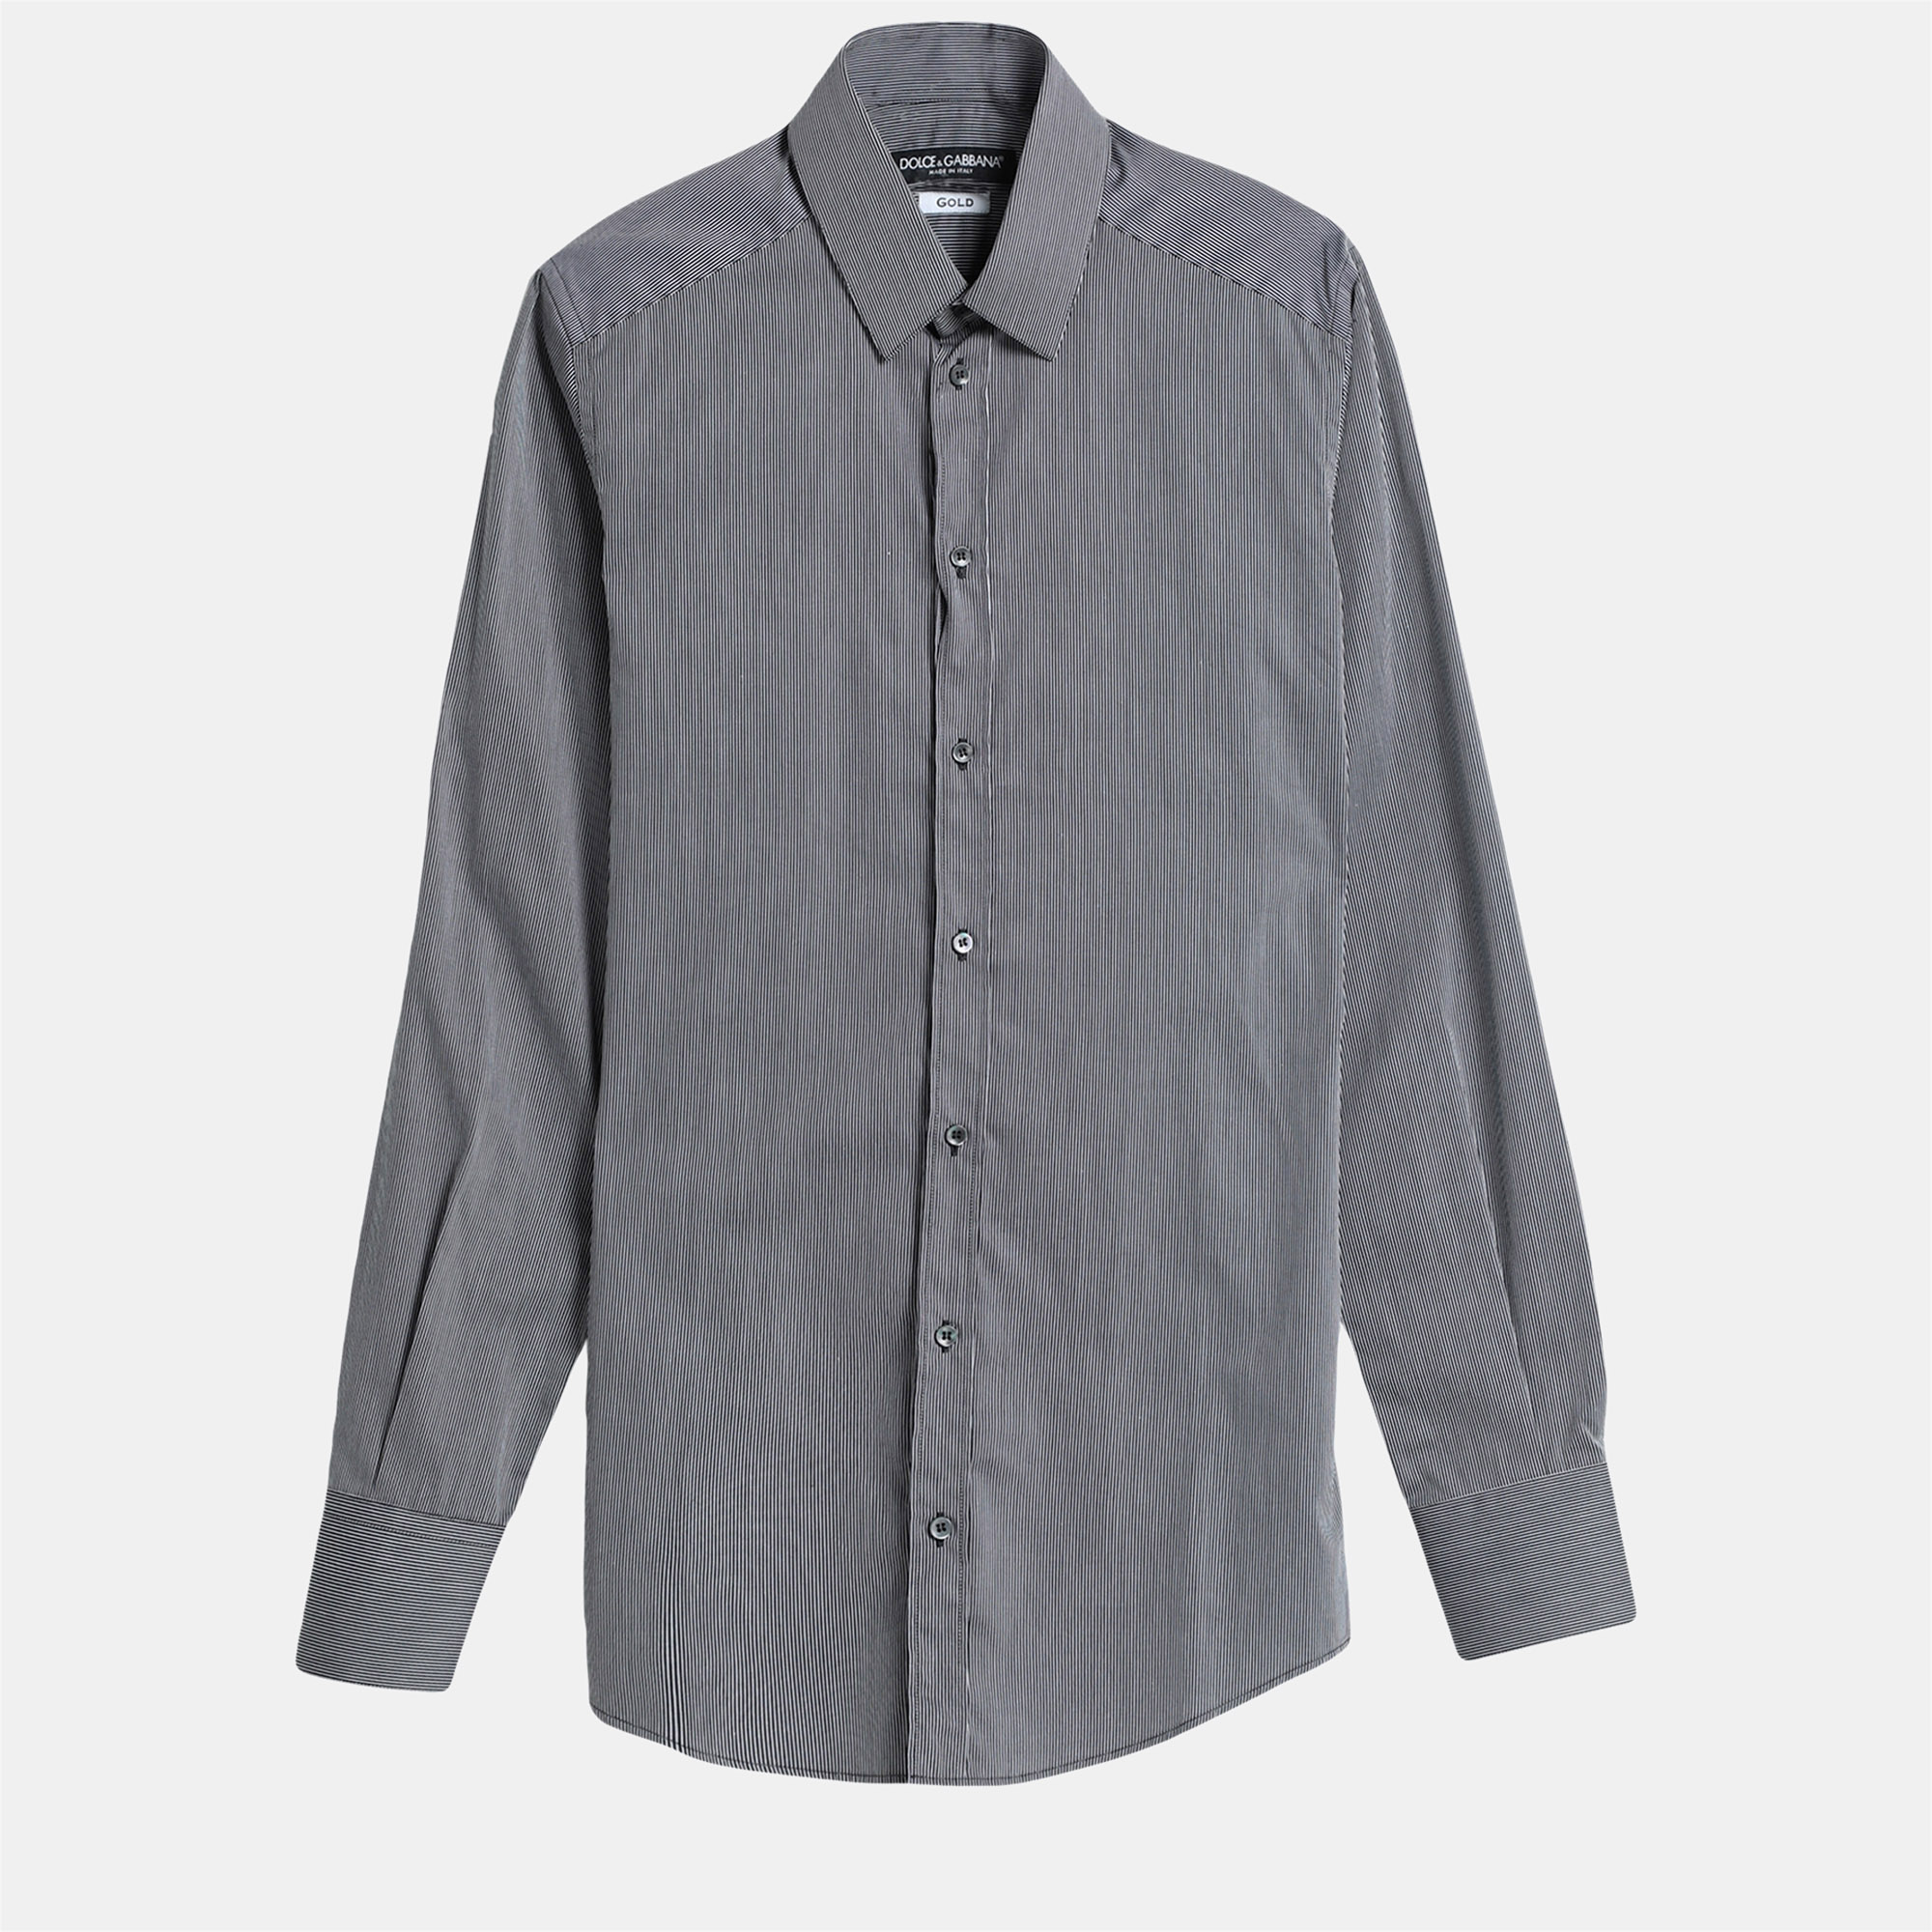 Dolce & gabbana black striped cotton long sleeve shirt s (us 15)